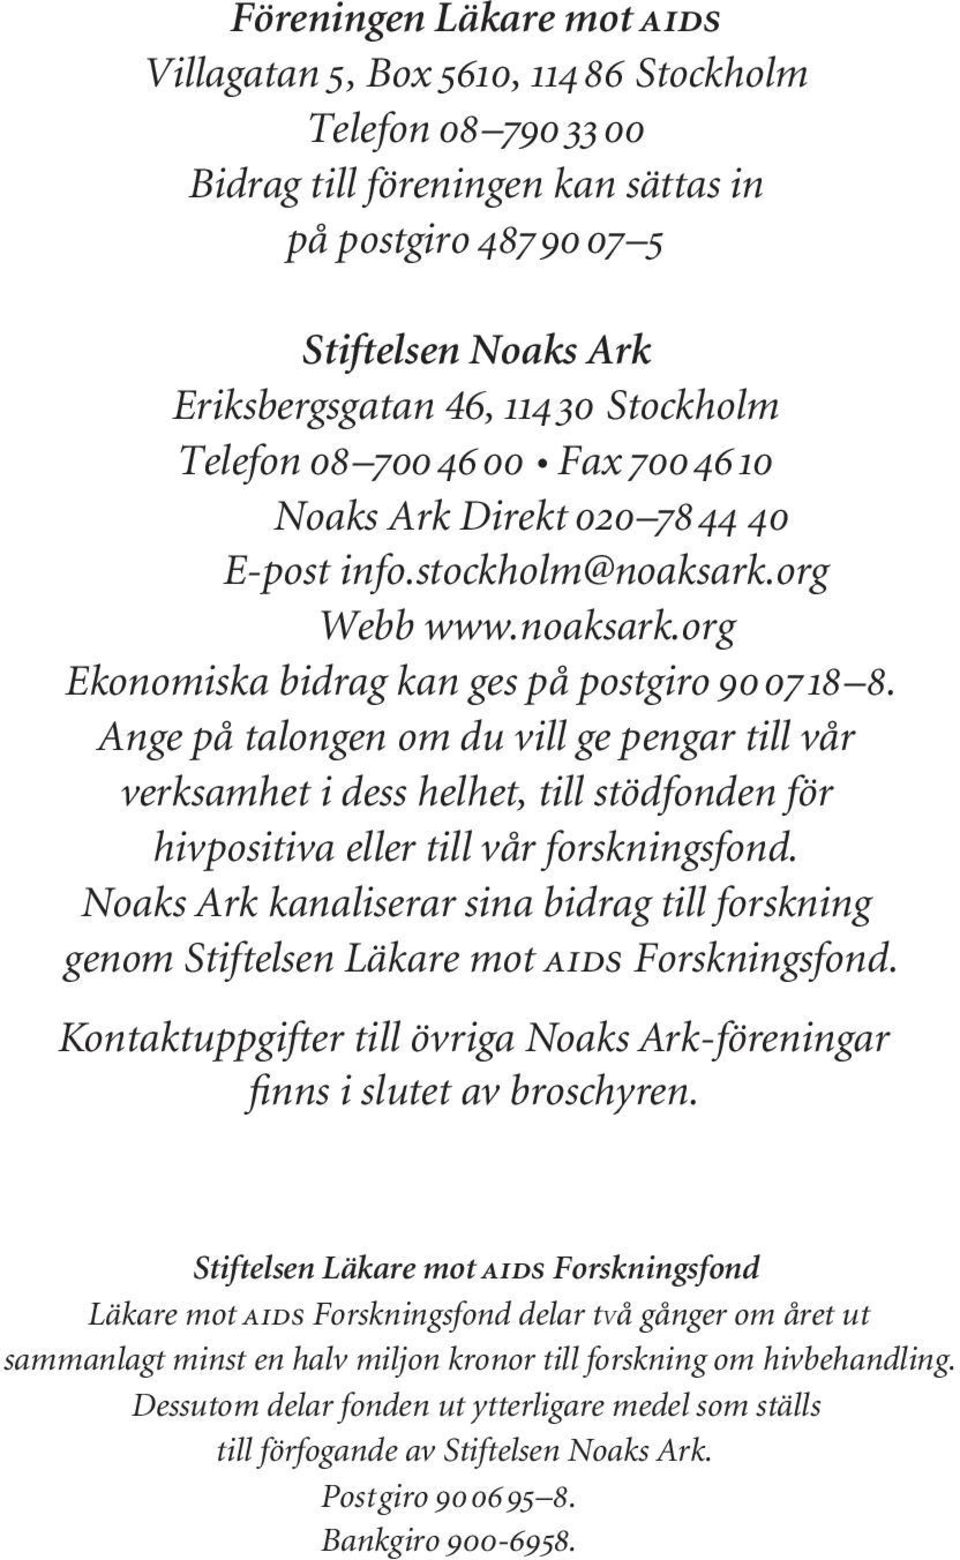 Ark700 46 10 Eriksbergsgatan Noaks Ark 46, Direkt 114 30020 78 Stockholm 44 40 Telefon E-post 08 700 info.stockholm@noaksark.org 46 00 Fax 700 46 10 Noaks Webb Ark www.noaksark.org Direkt 020 78 44 40.